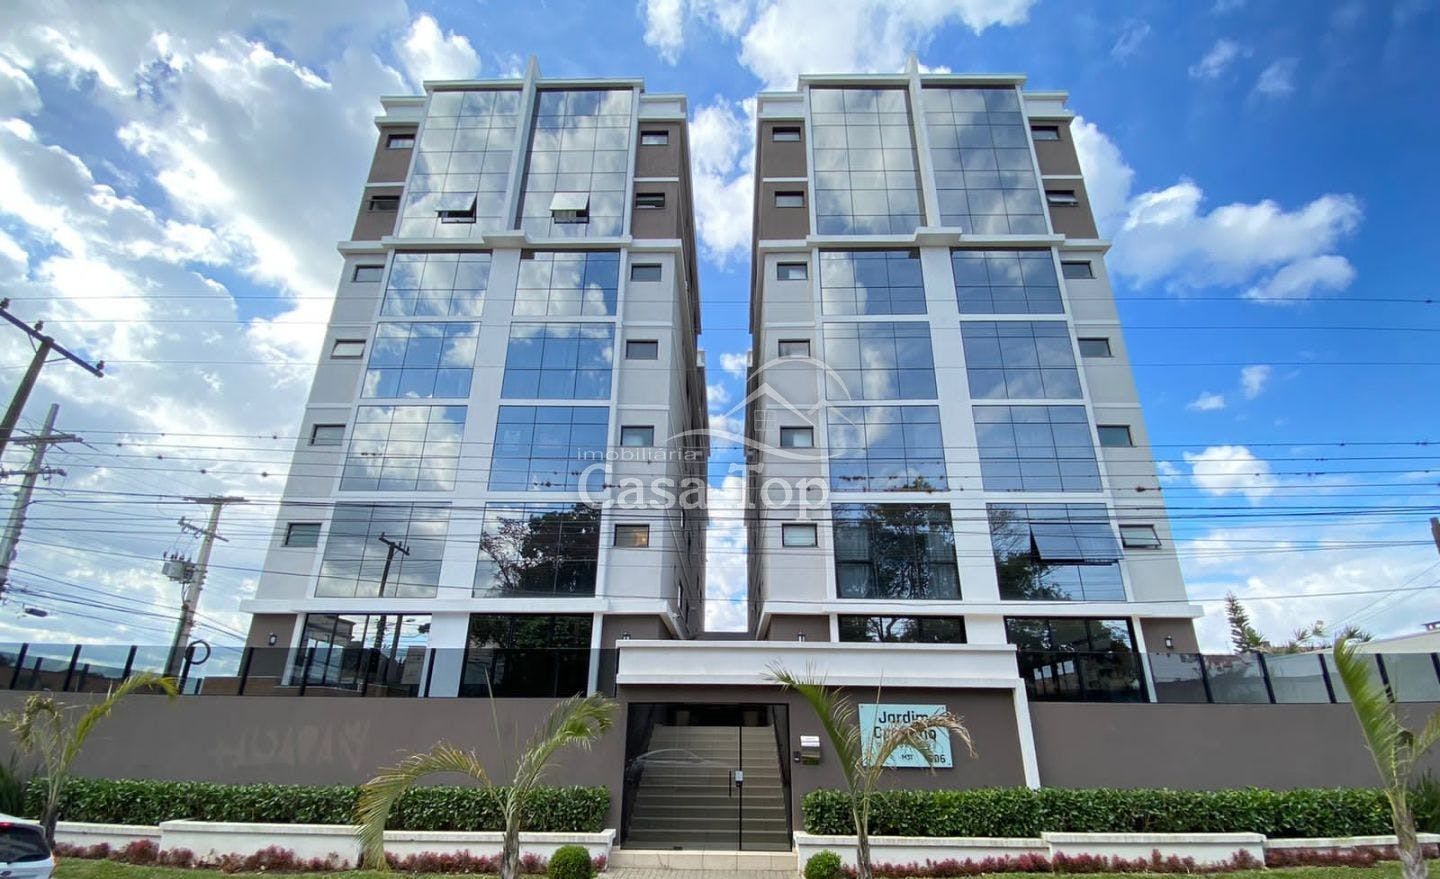  Apartamento para alugar Residencial Jardim Carvalho 